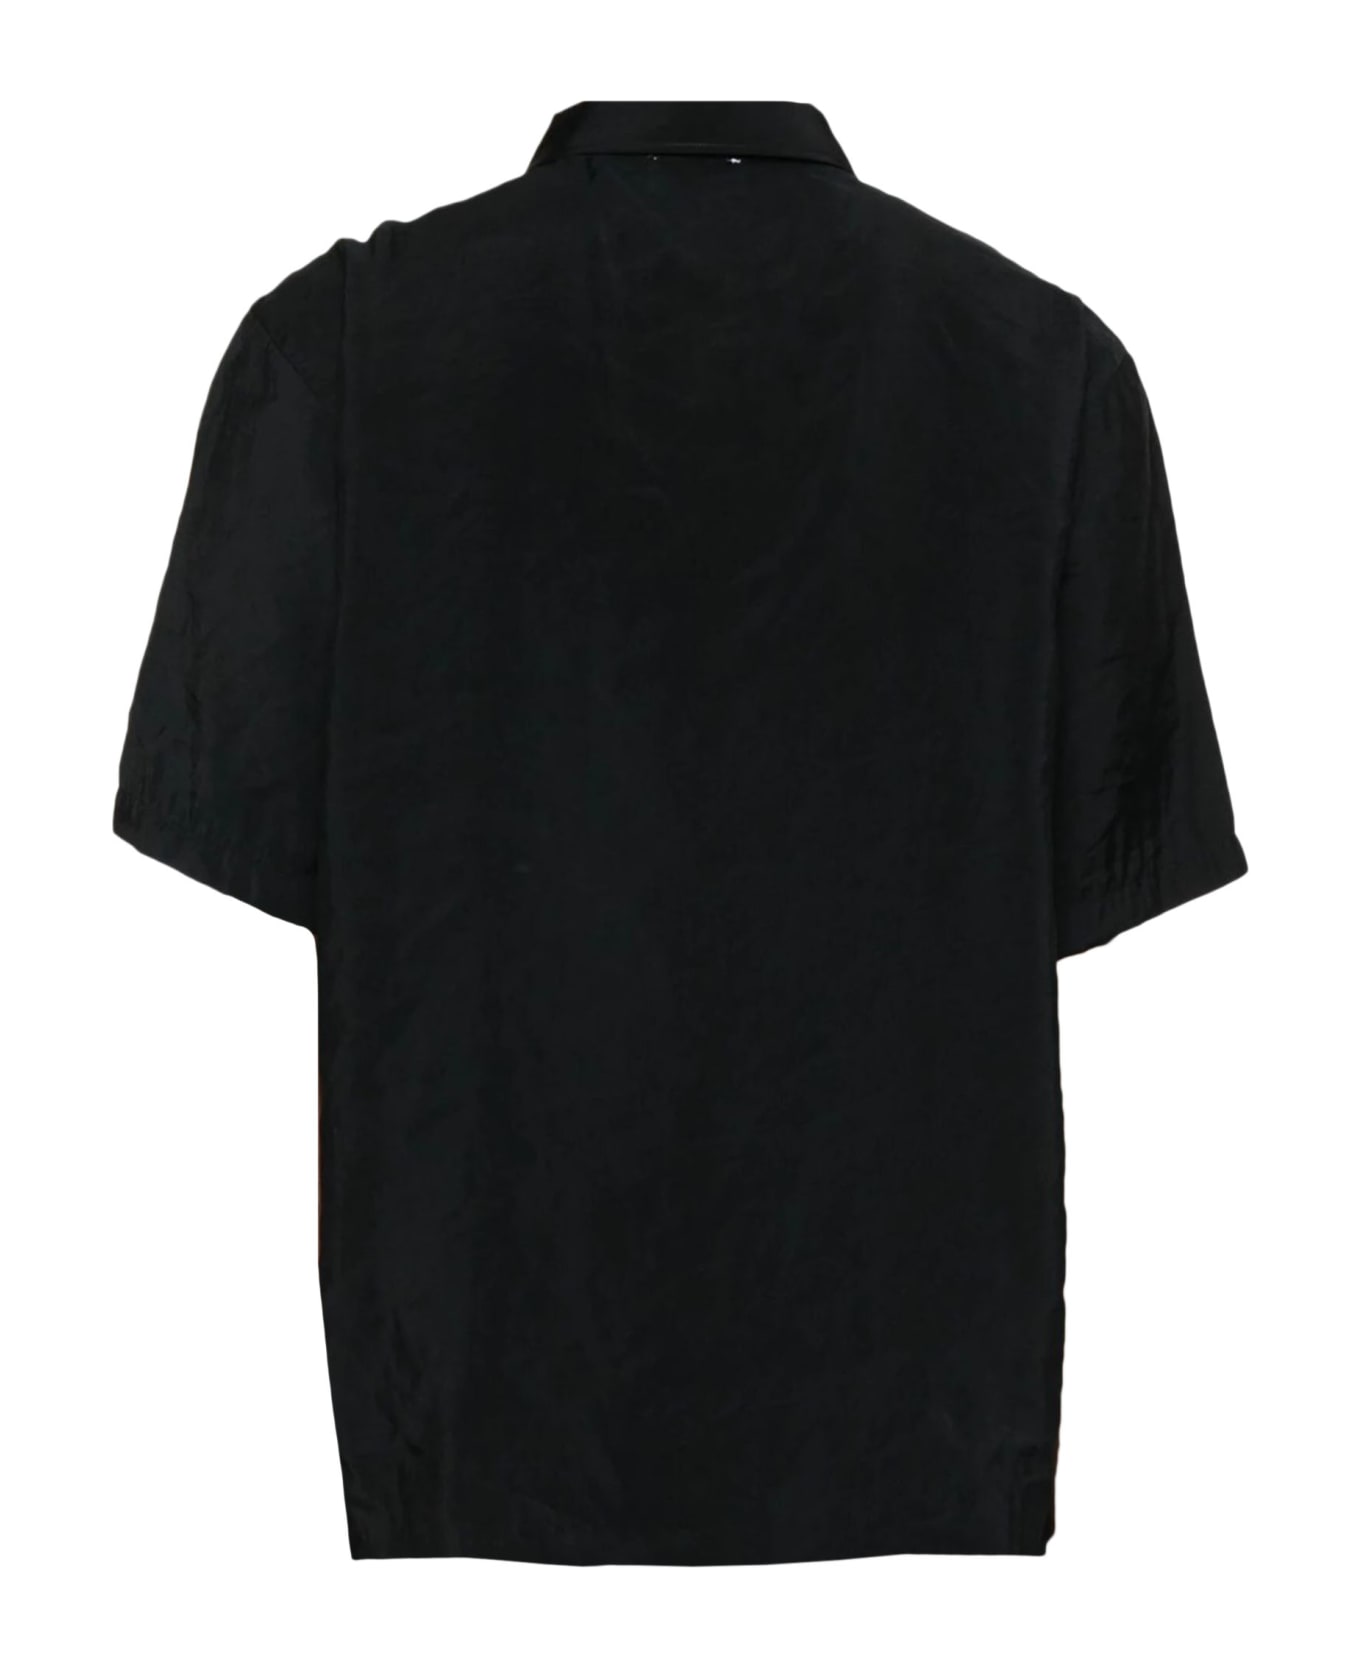 Family First Milano Black Cupro Shirt - BLACK シャツ